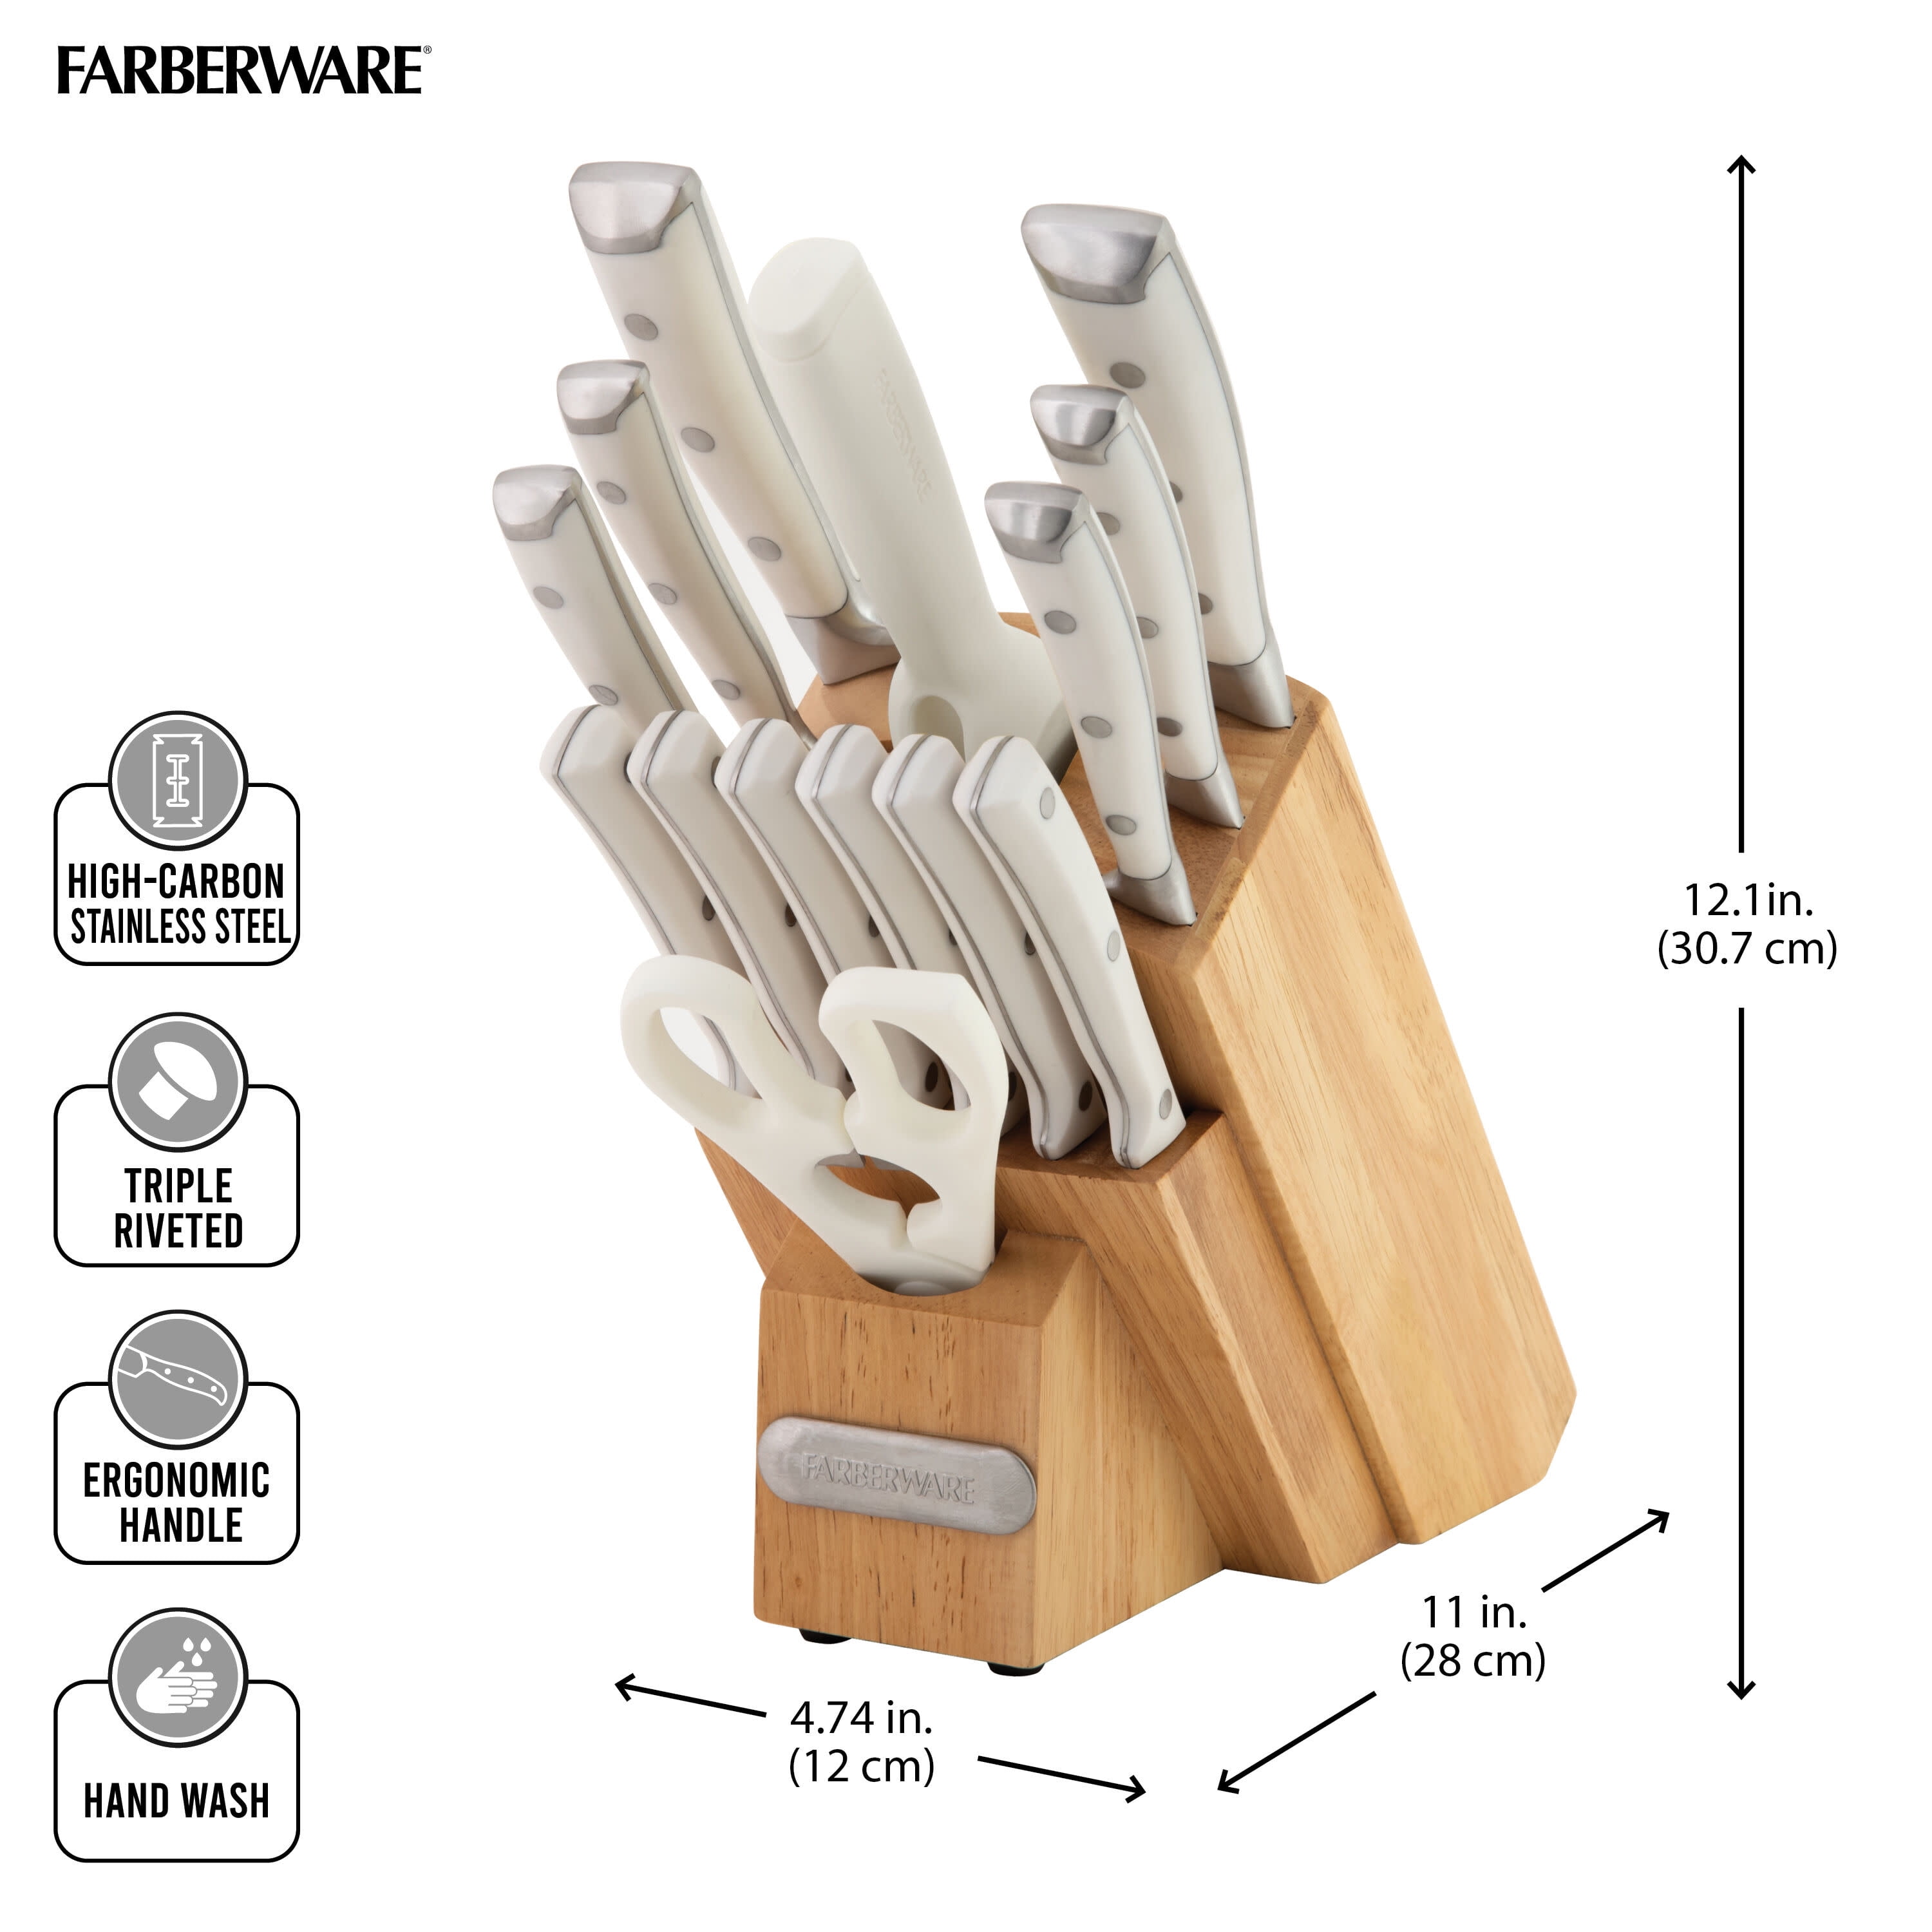 Farberware Edgekeeper® Professional 15-piece Forged Triple Riveted Knife  Block Set 